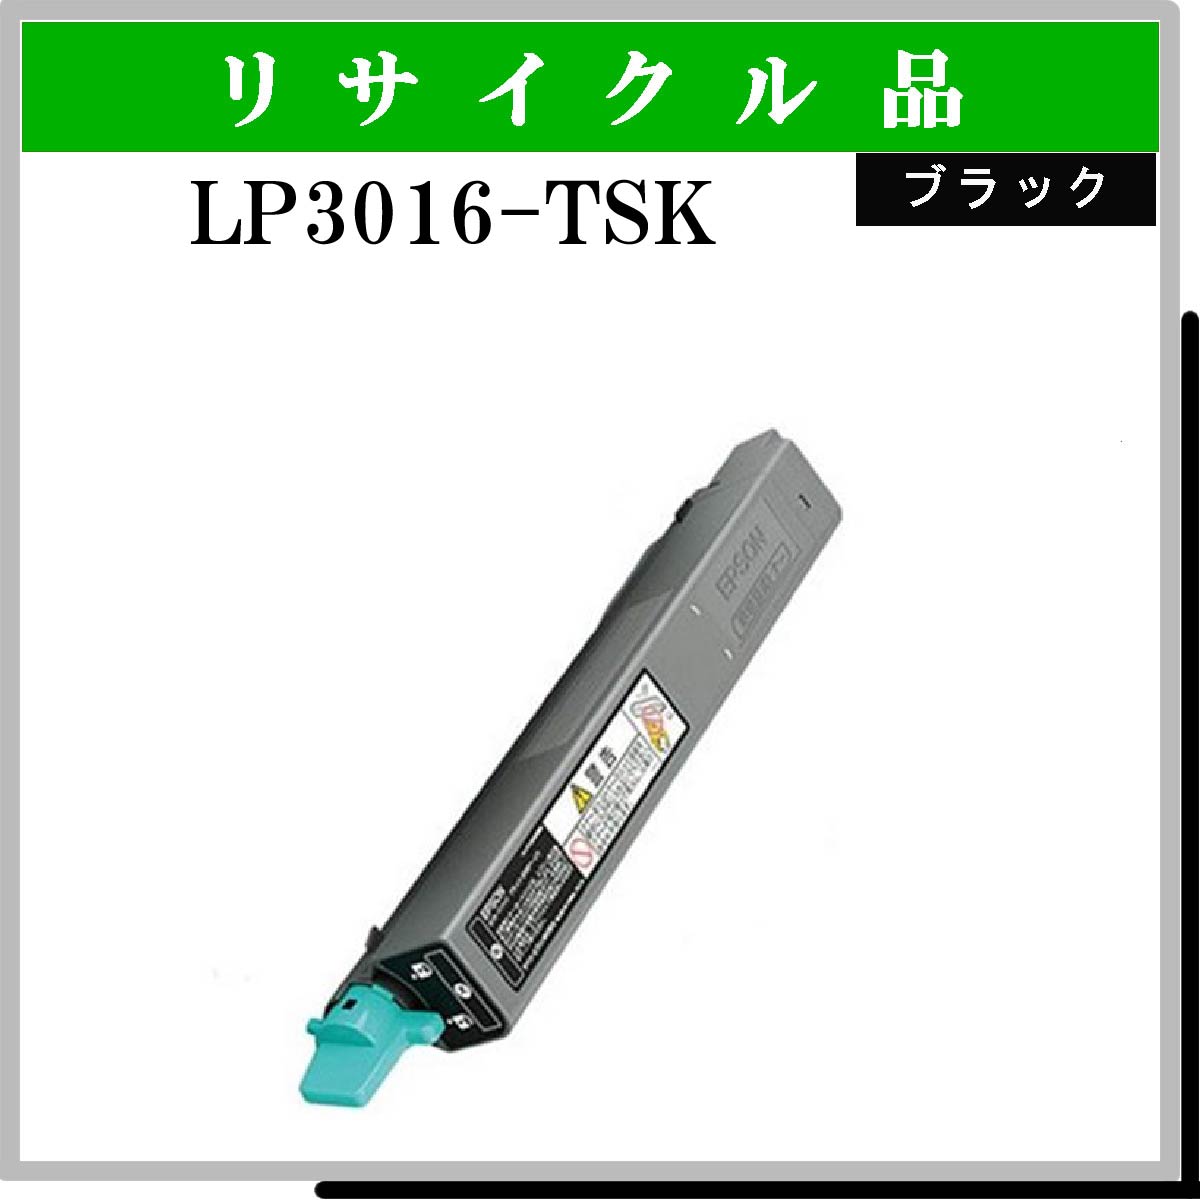 LP3016-TSK